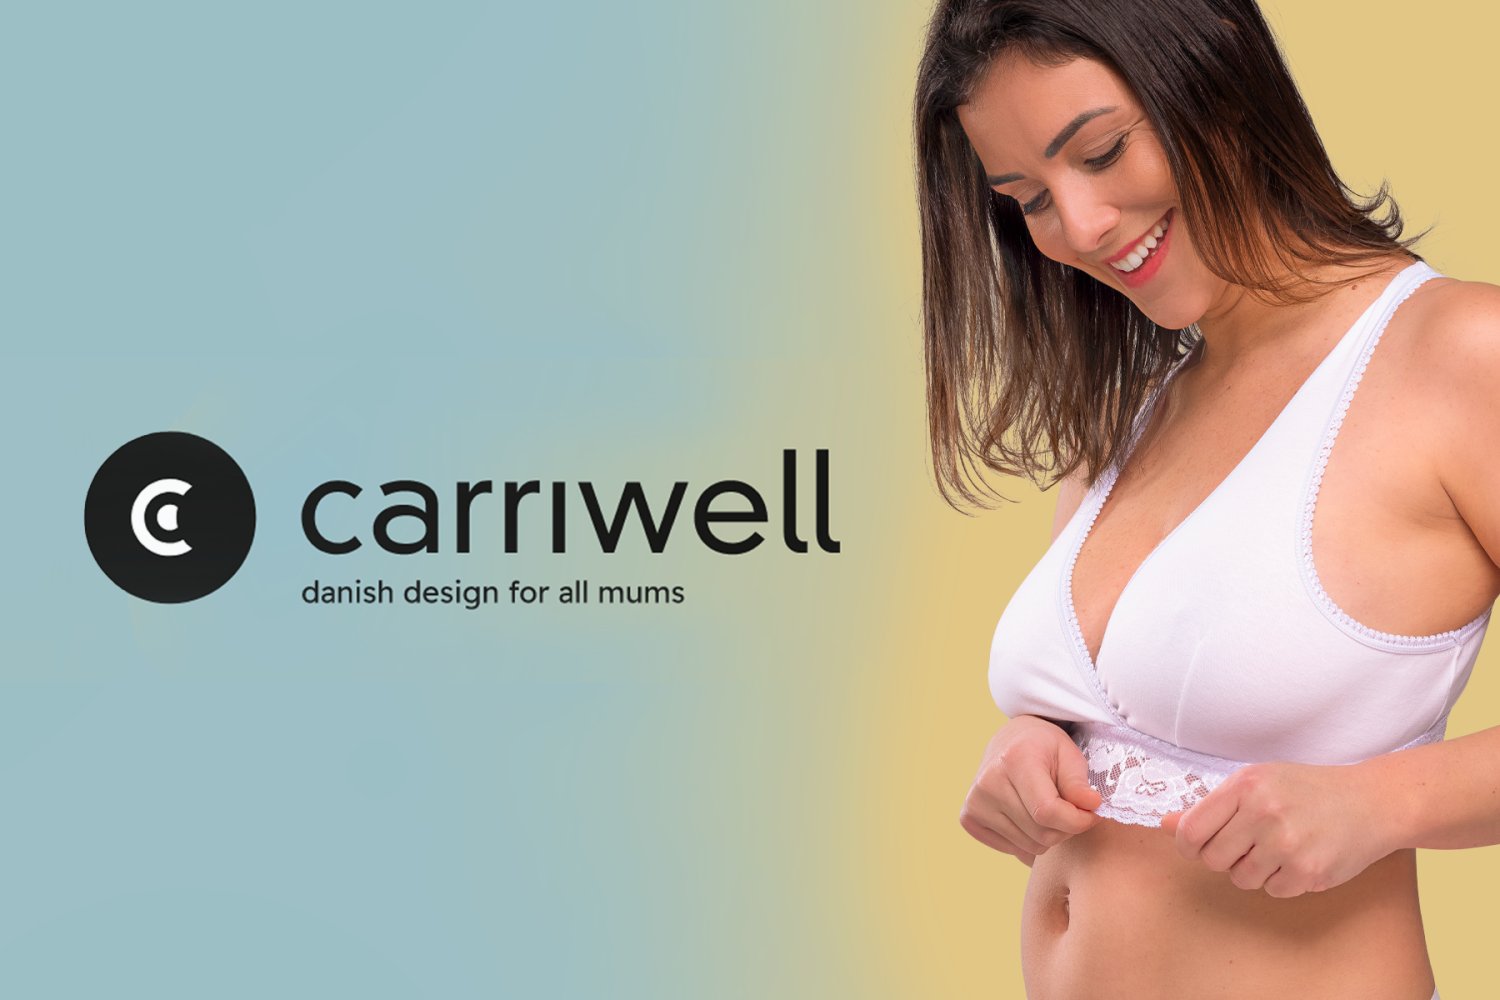 Carriwell Maternity & Nursing Bra With Carri-gel Support – bras